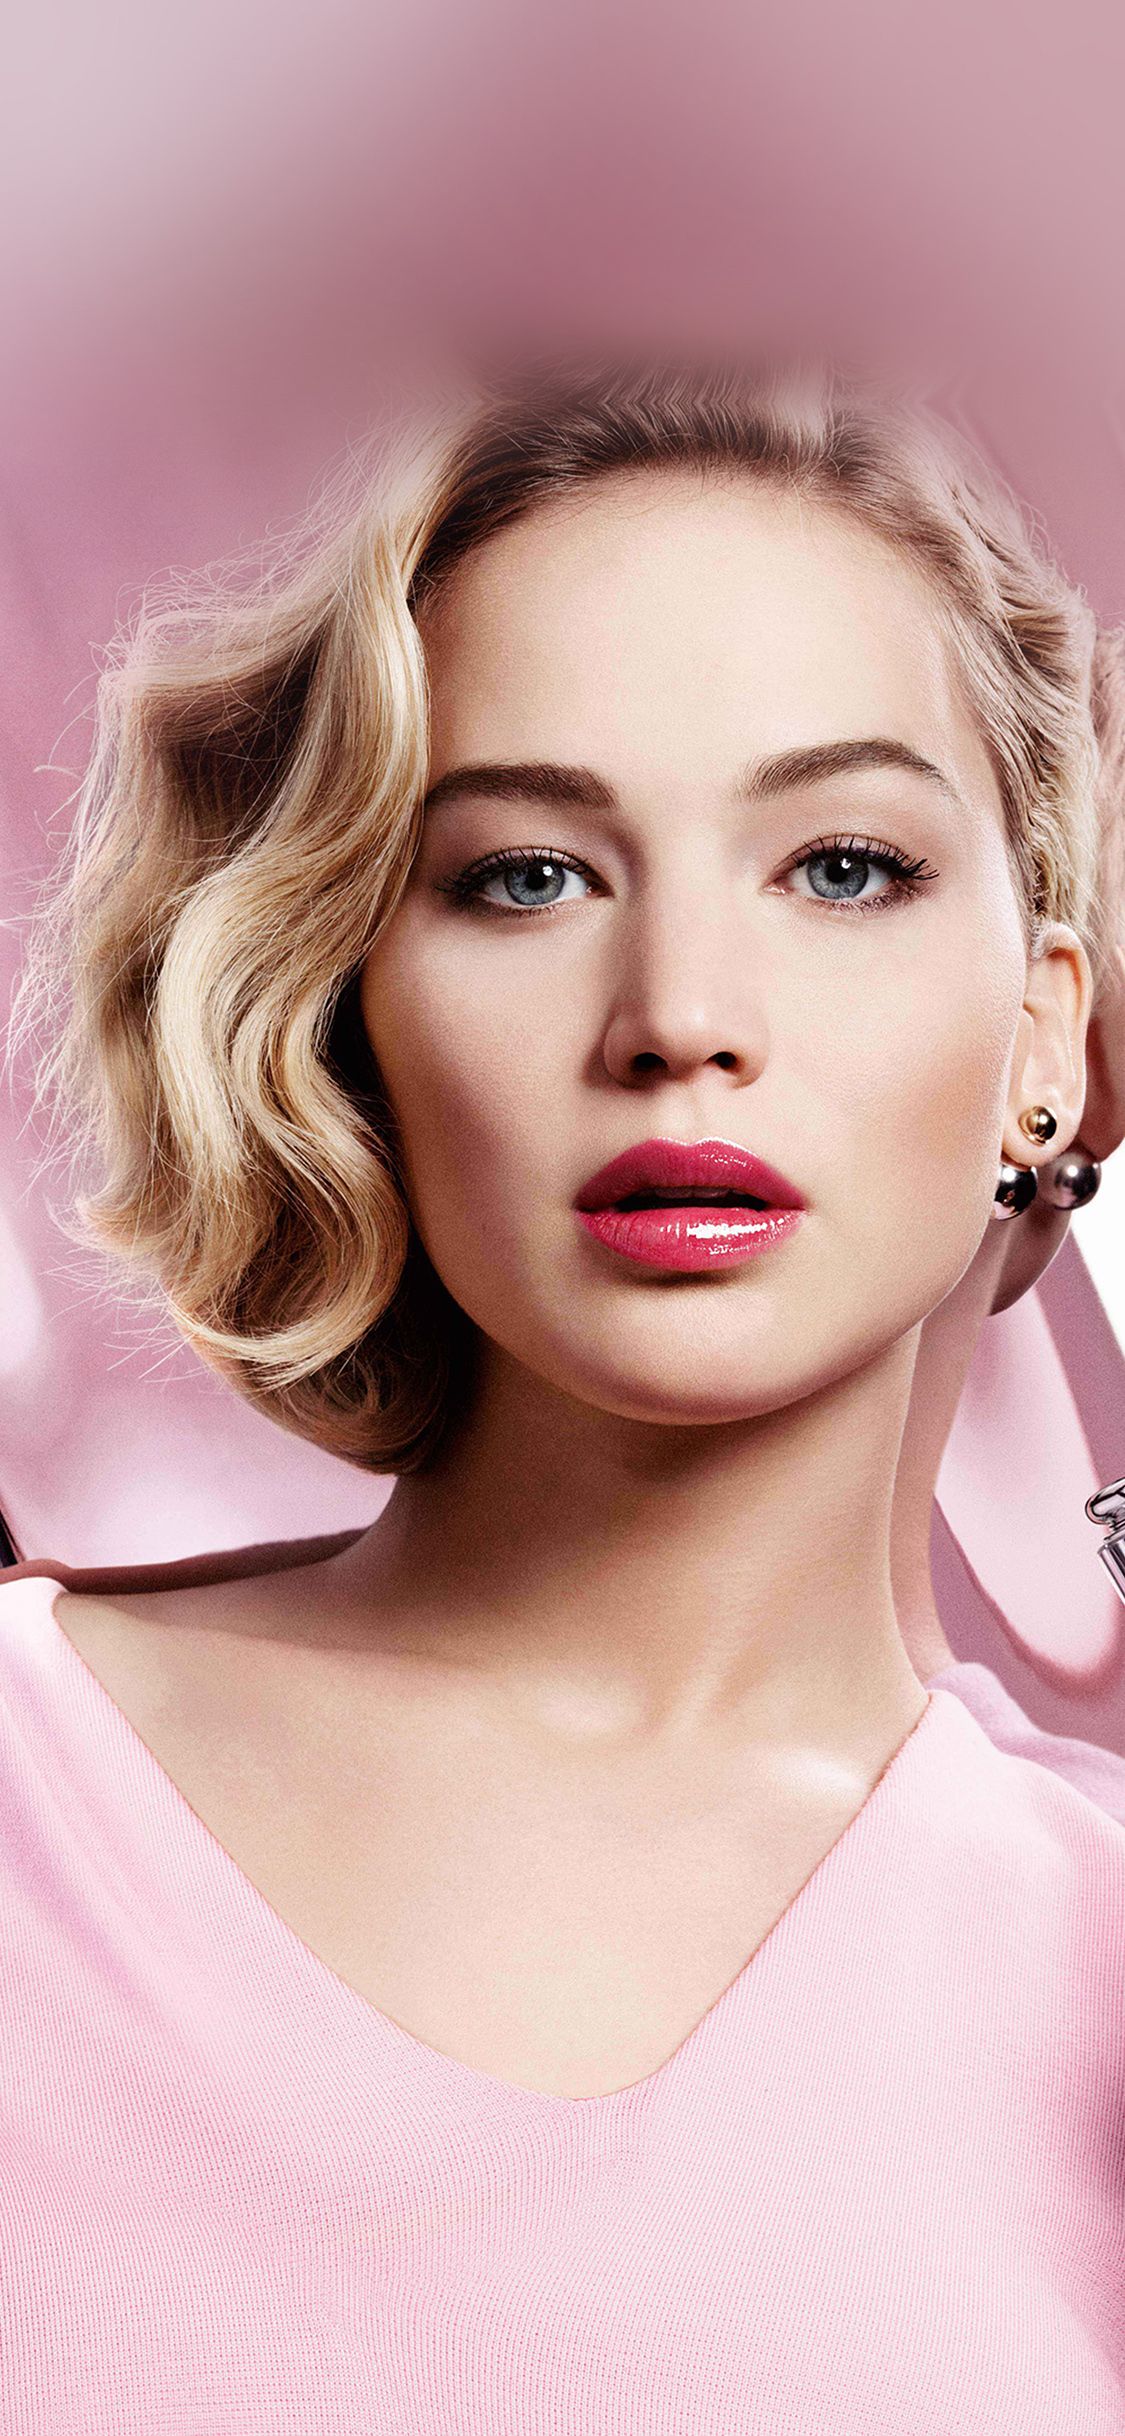 iPhone X wallpaper. jennifer lawrence pink model celebrity lips